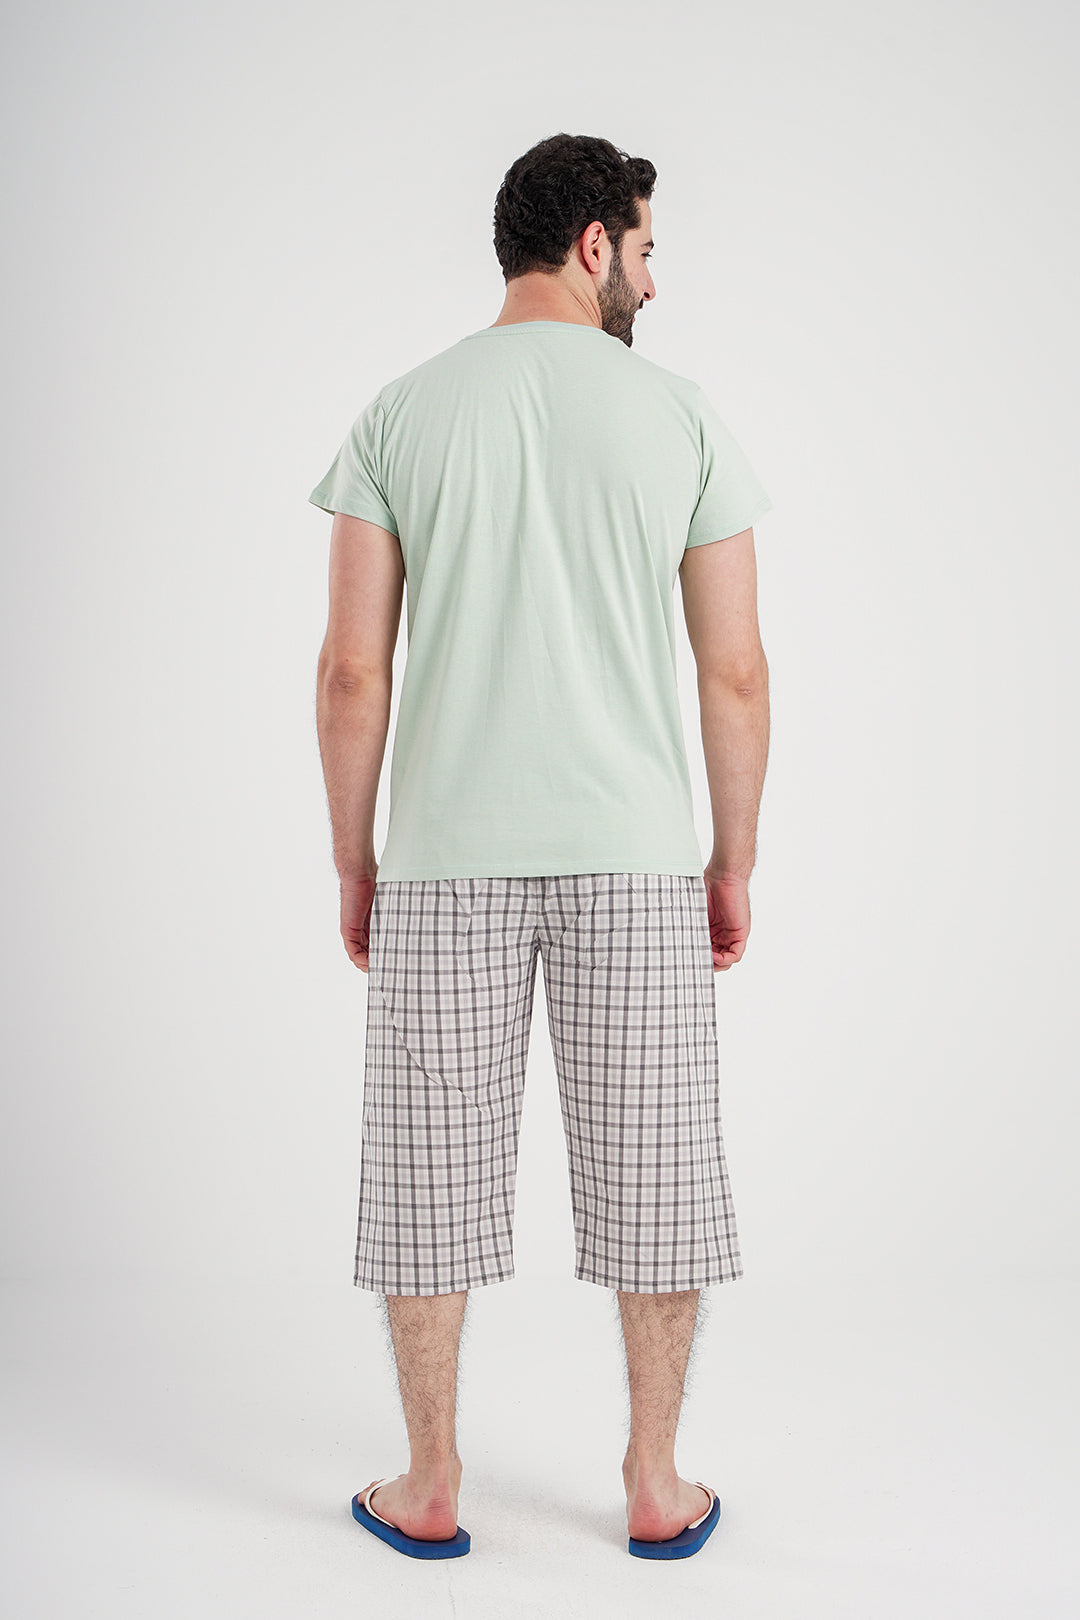 CALI Men's Pentacore Check Pajamas